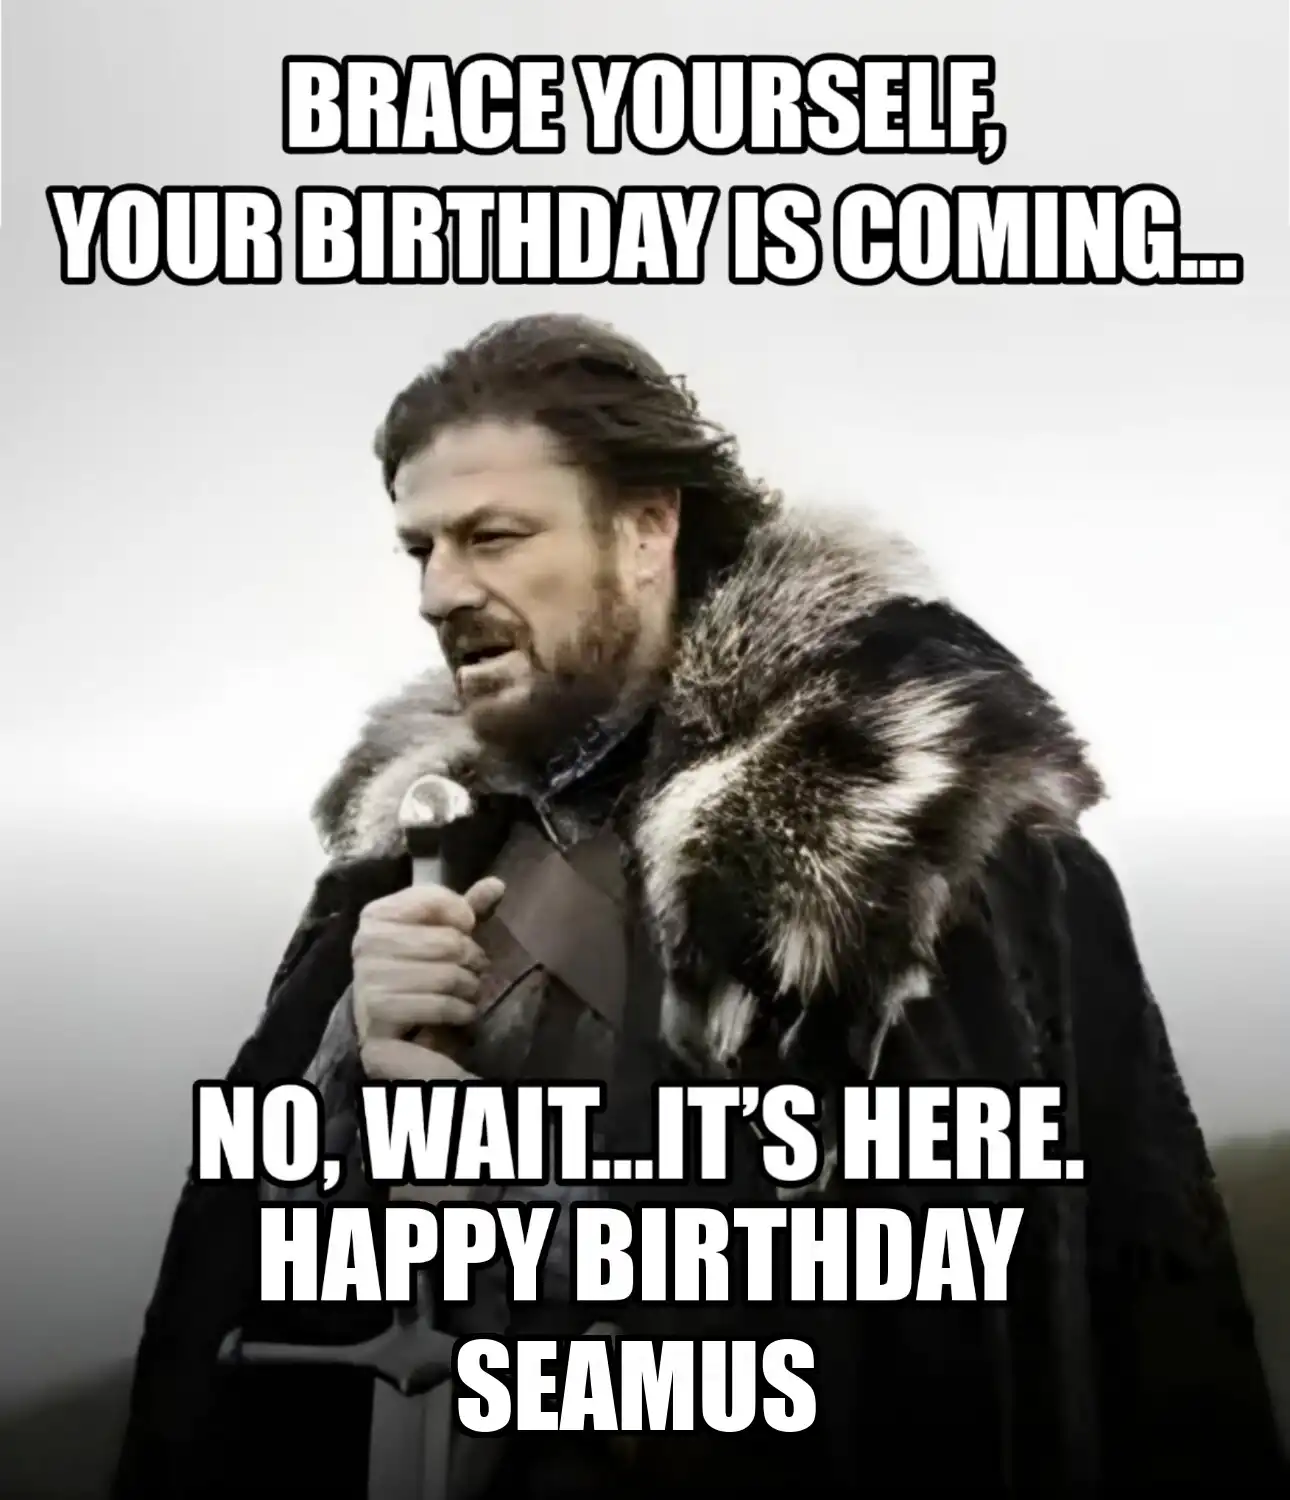 Happy Birthday Seamus Brace Yourself Your Birthday Is Coming Meme